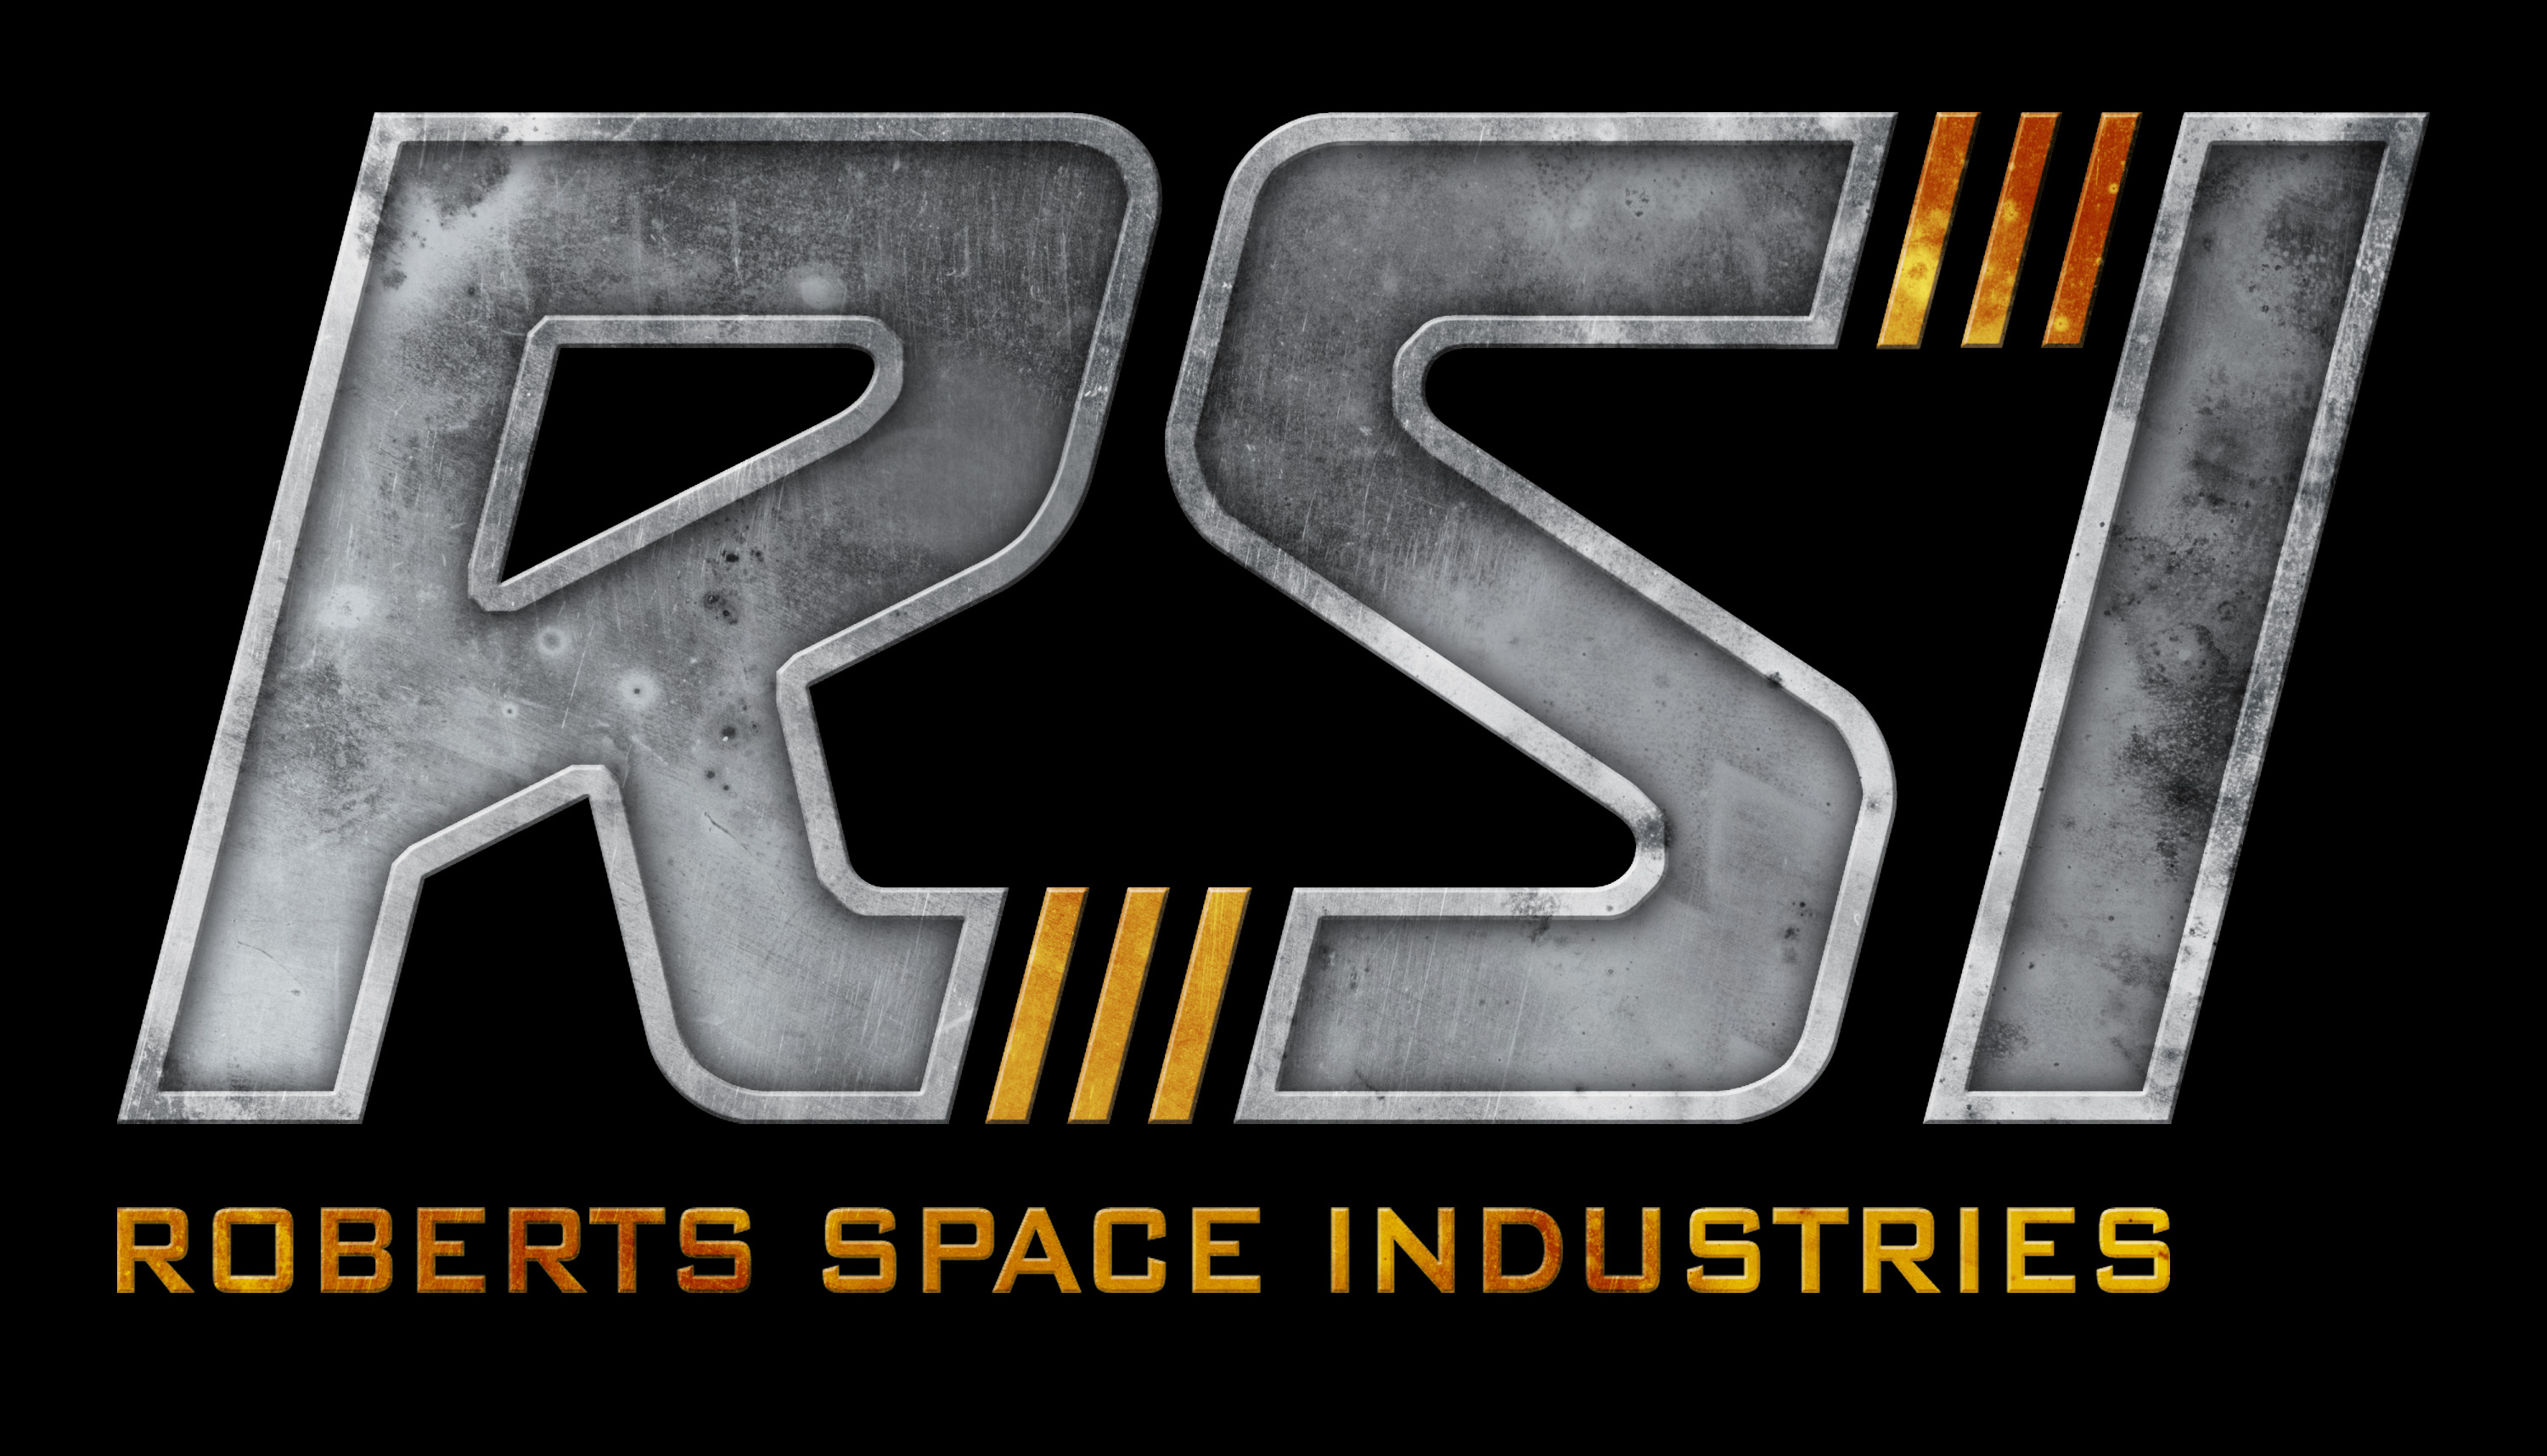 Star Citizen - Roberts Space Industries